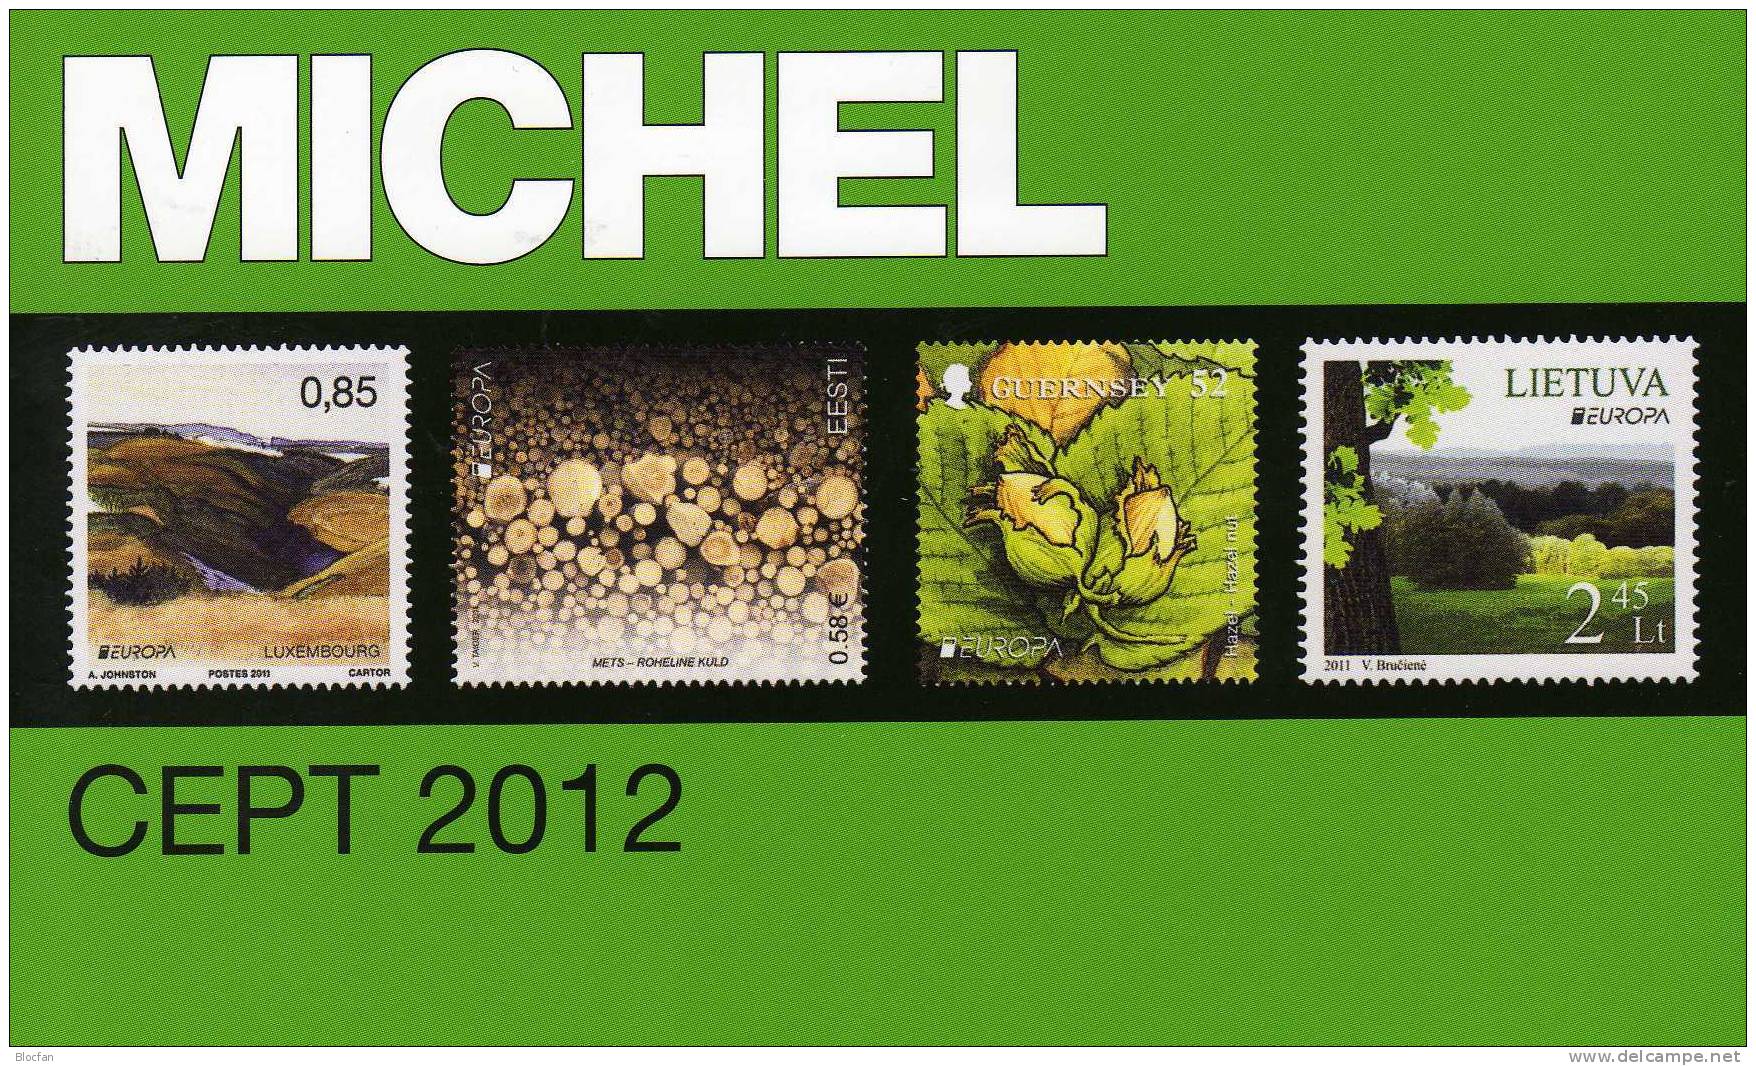 Stamp Catalogue New MlCHEL CEPT 2012 Neu 50€ With Jahrgangs-Tabelle Europa Vorläufer NATO EFTA KSZE Symphatie-Ausgaben - Collections